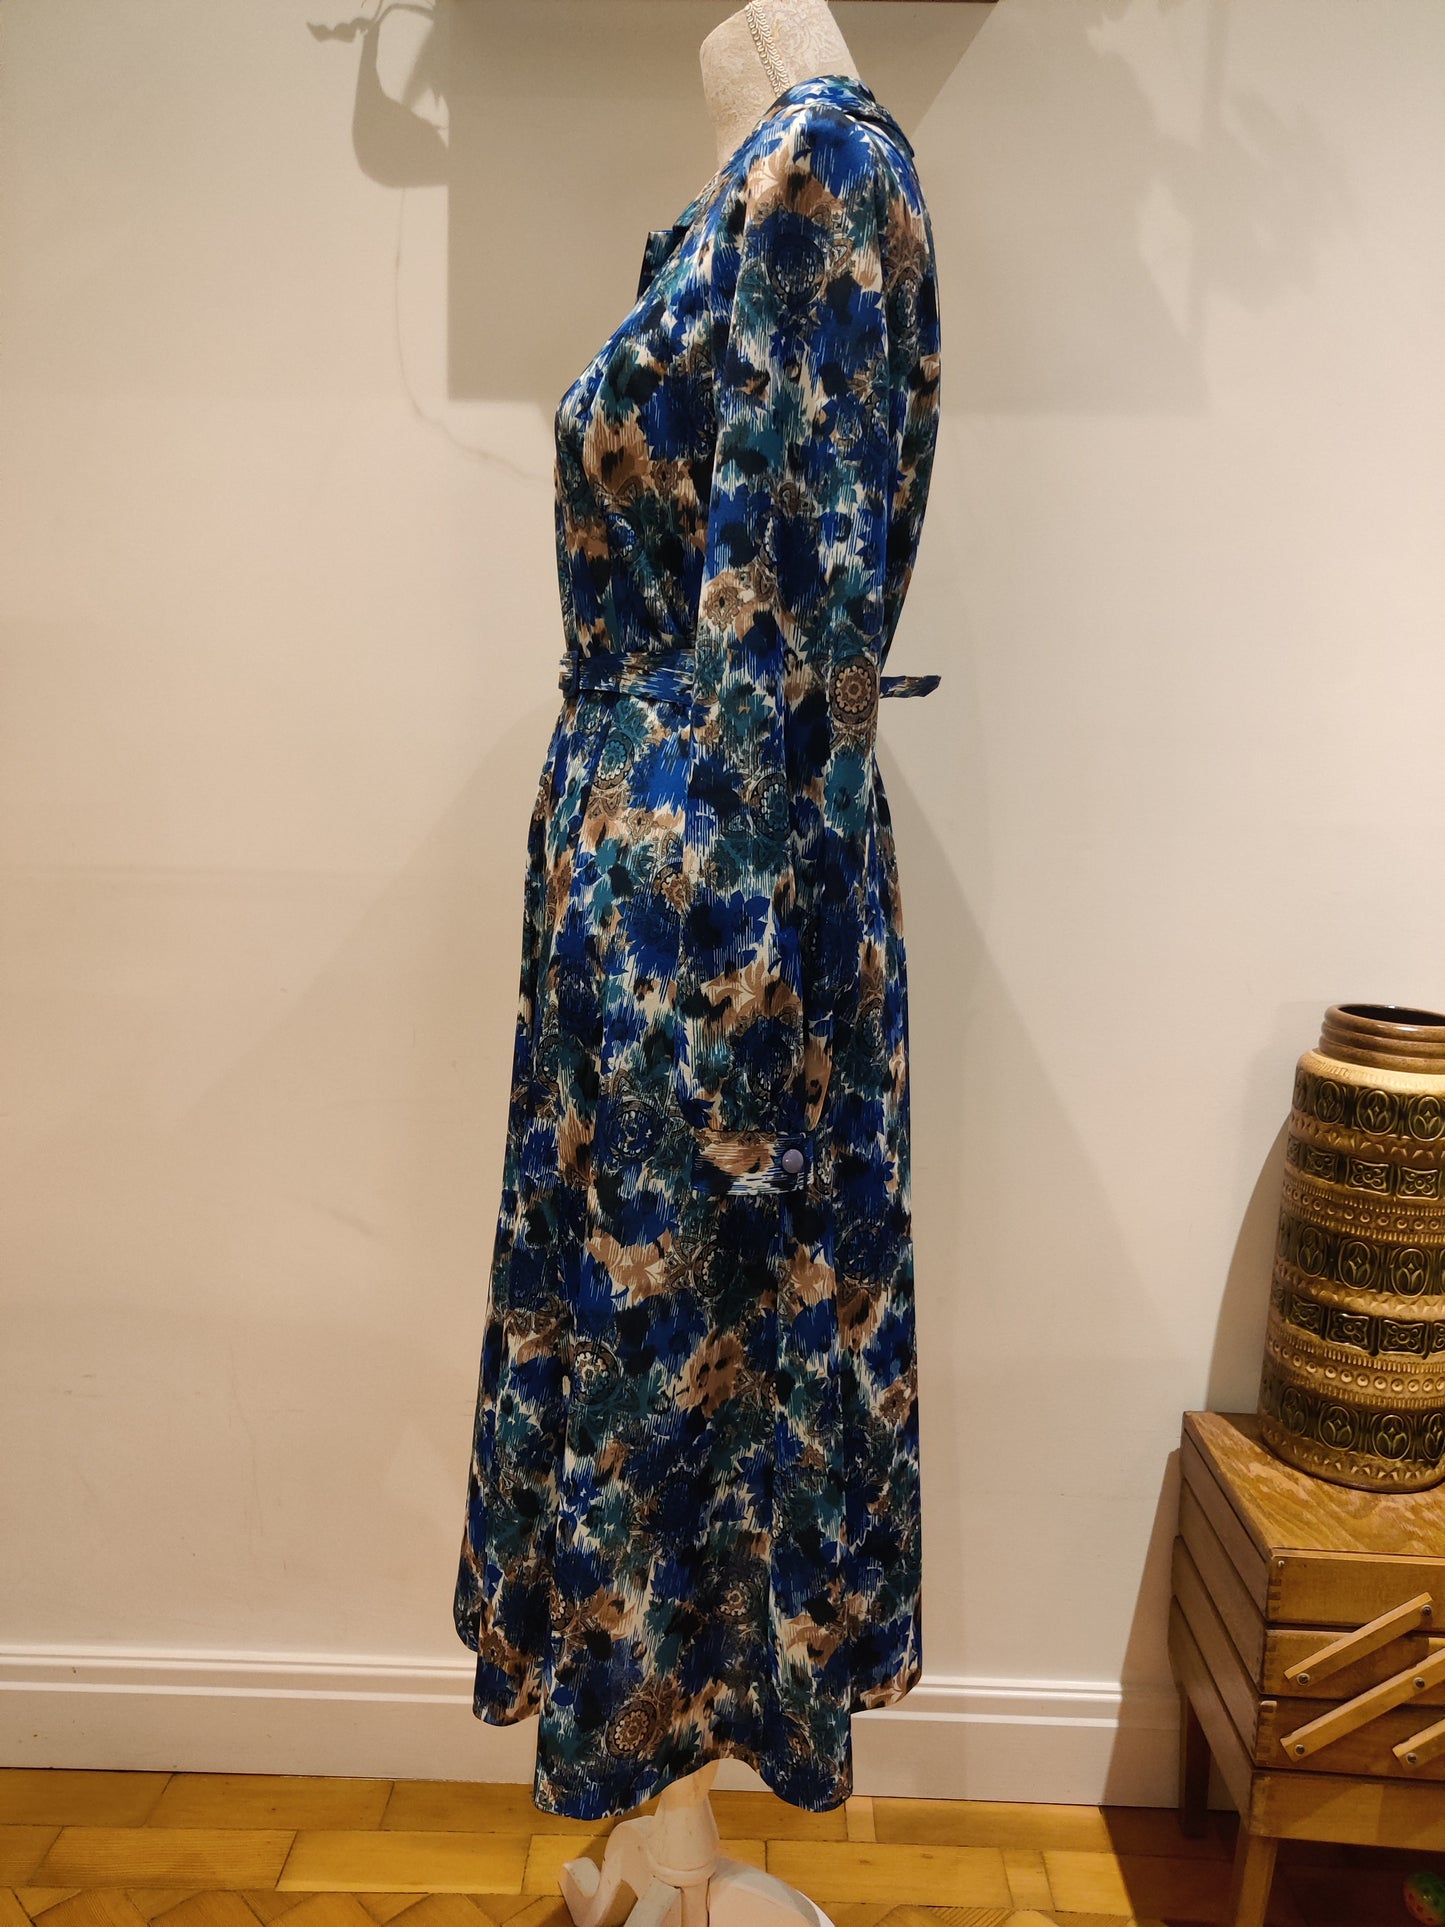 Size 18 blue vintage dress.